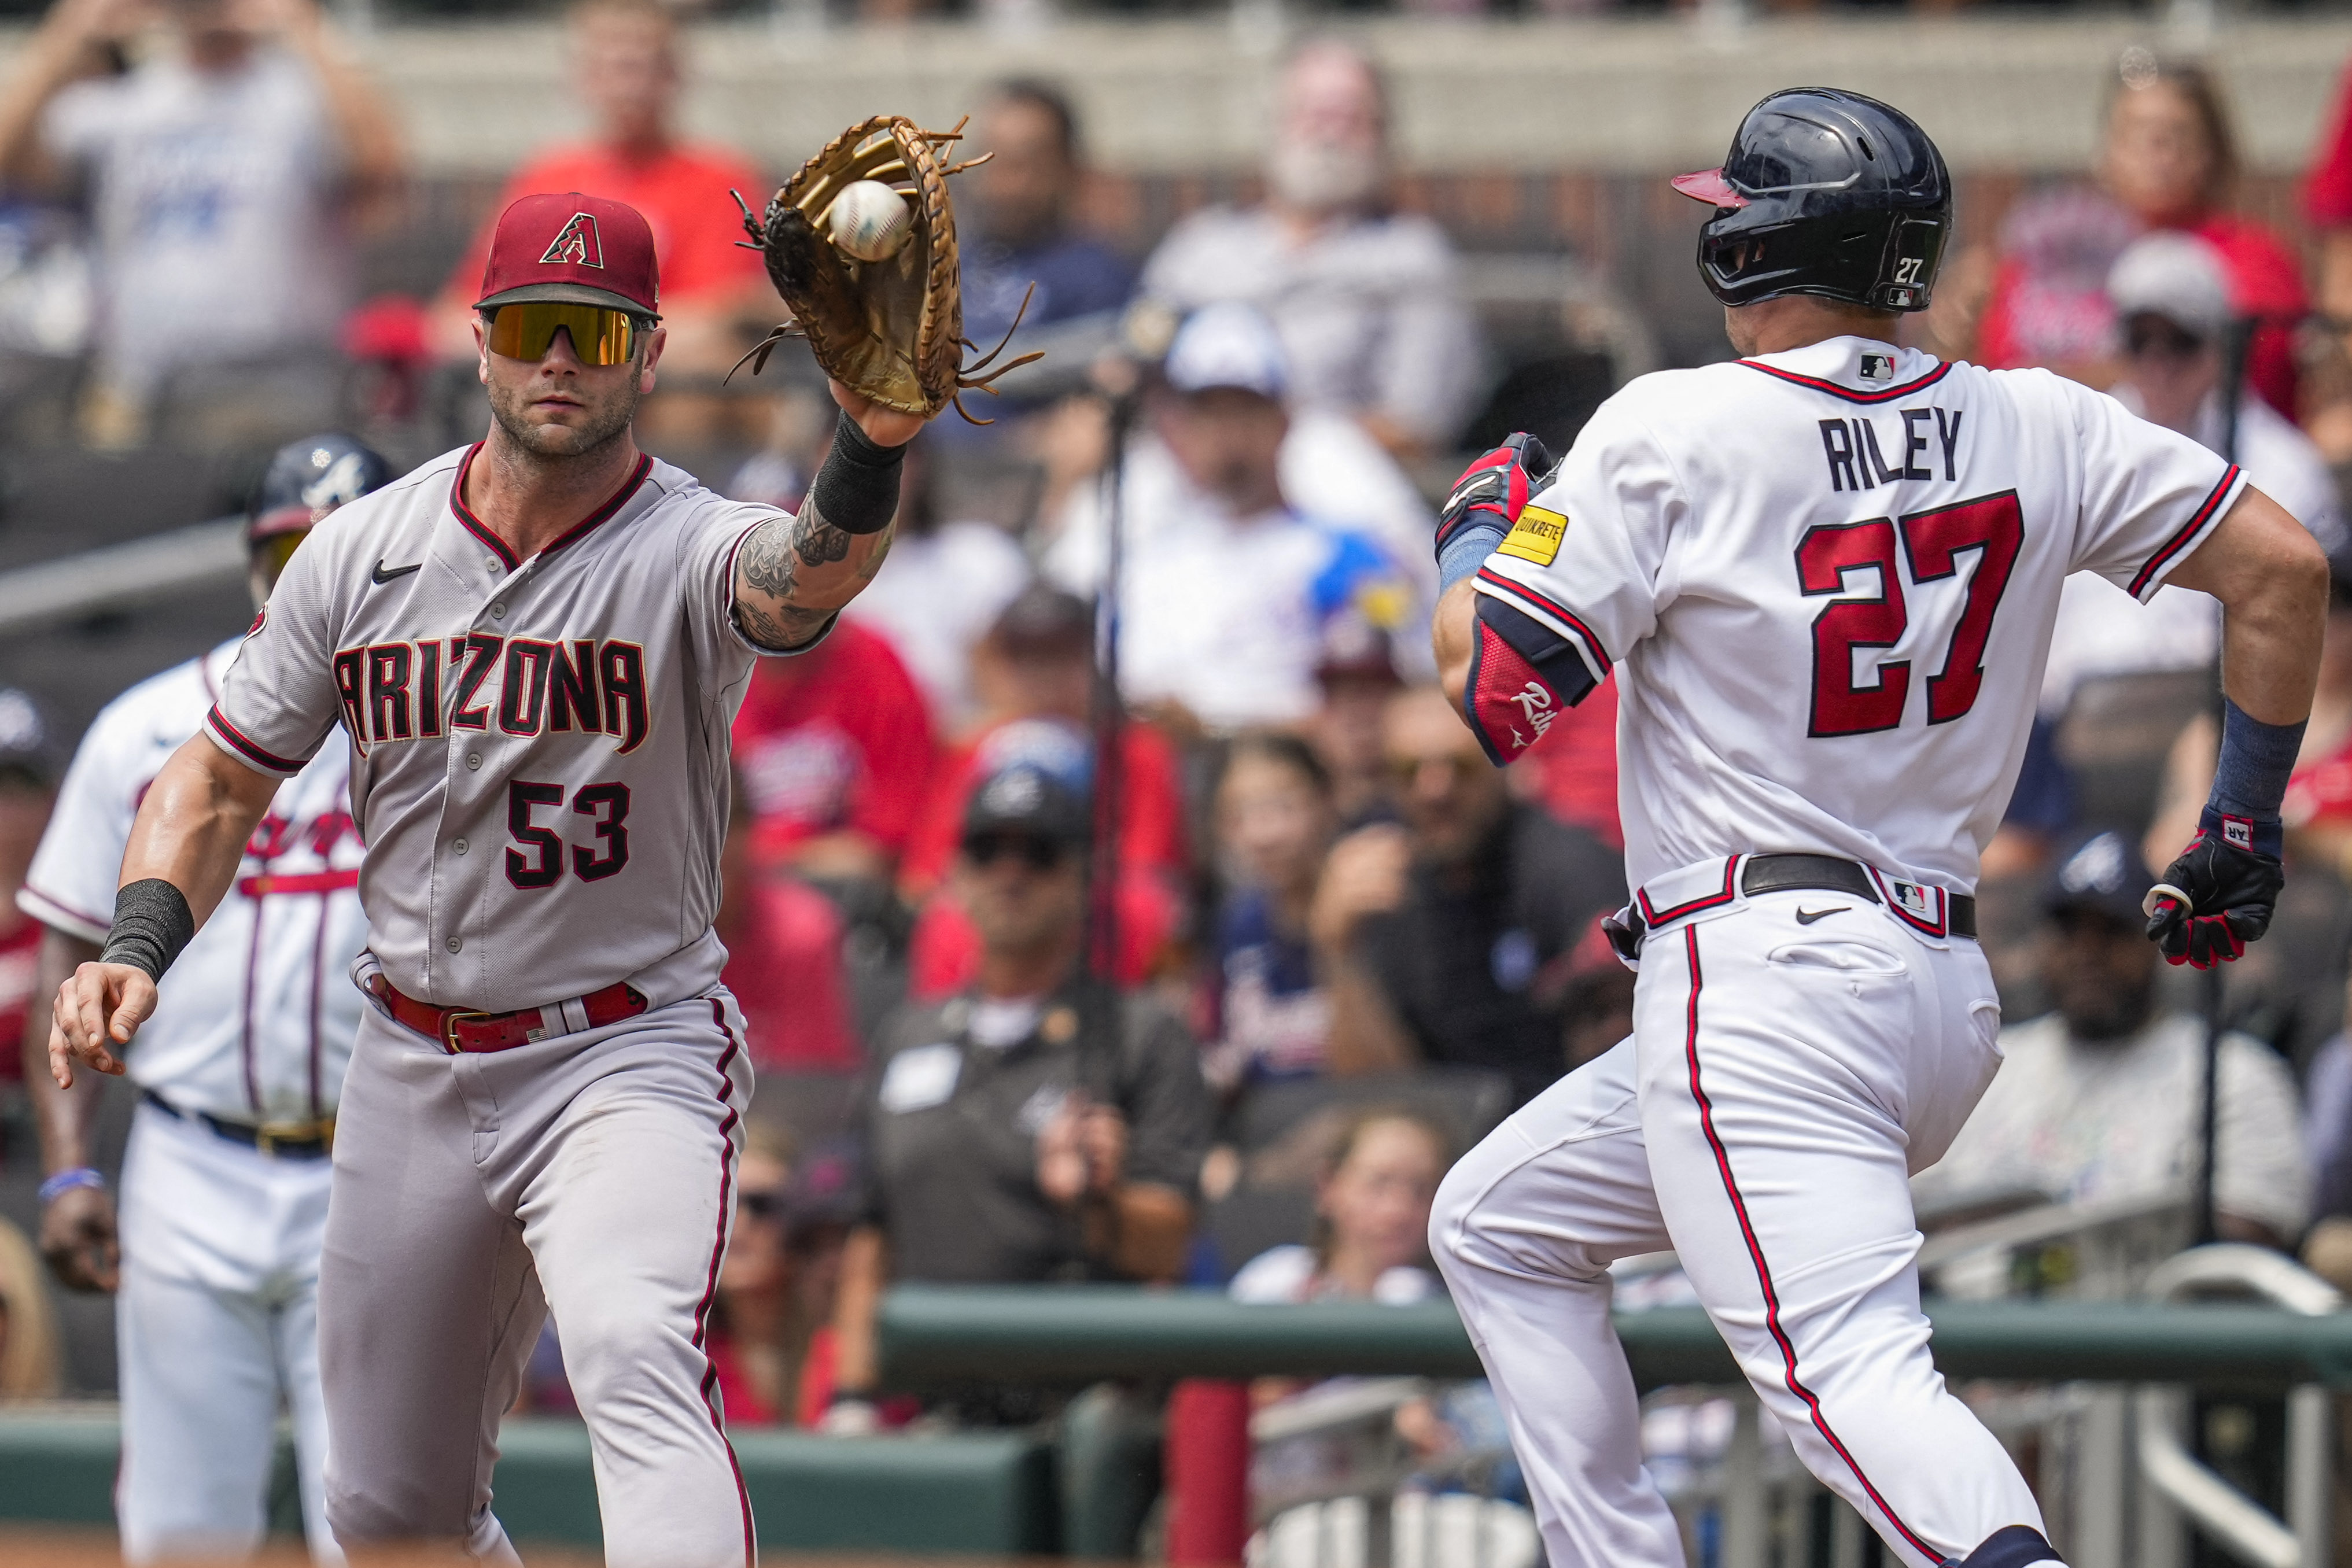 Photos: Austin Riley's blast helps Braves edge Phillies in Game 2